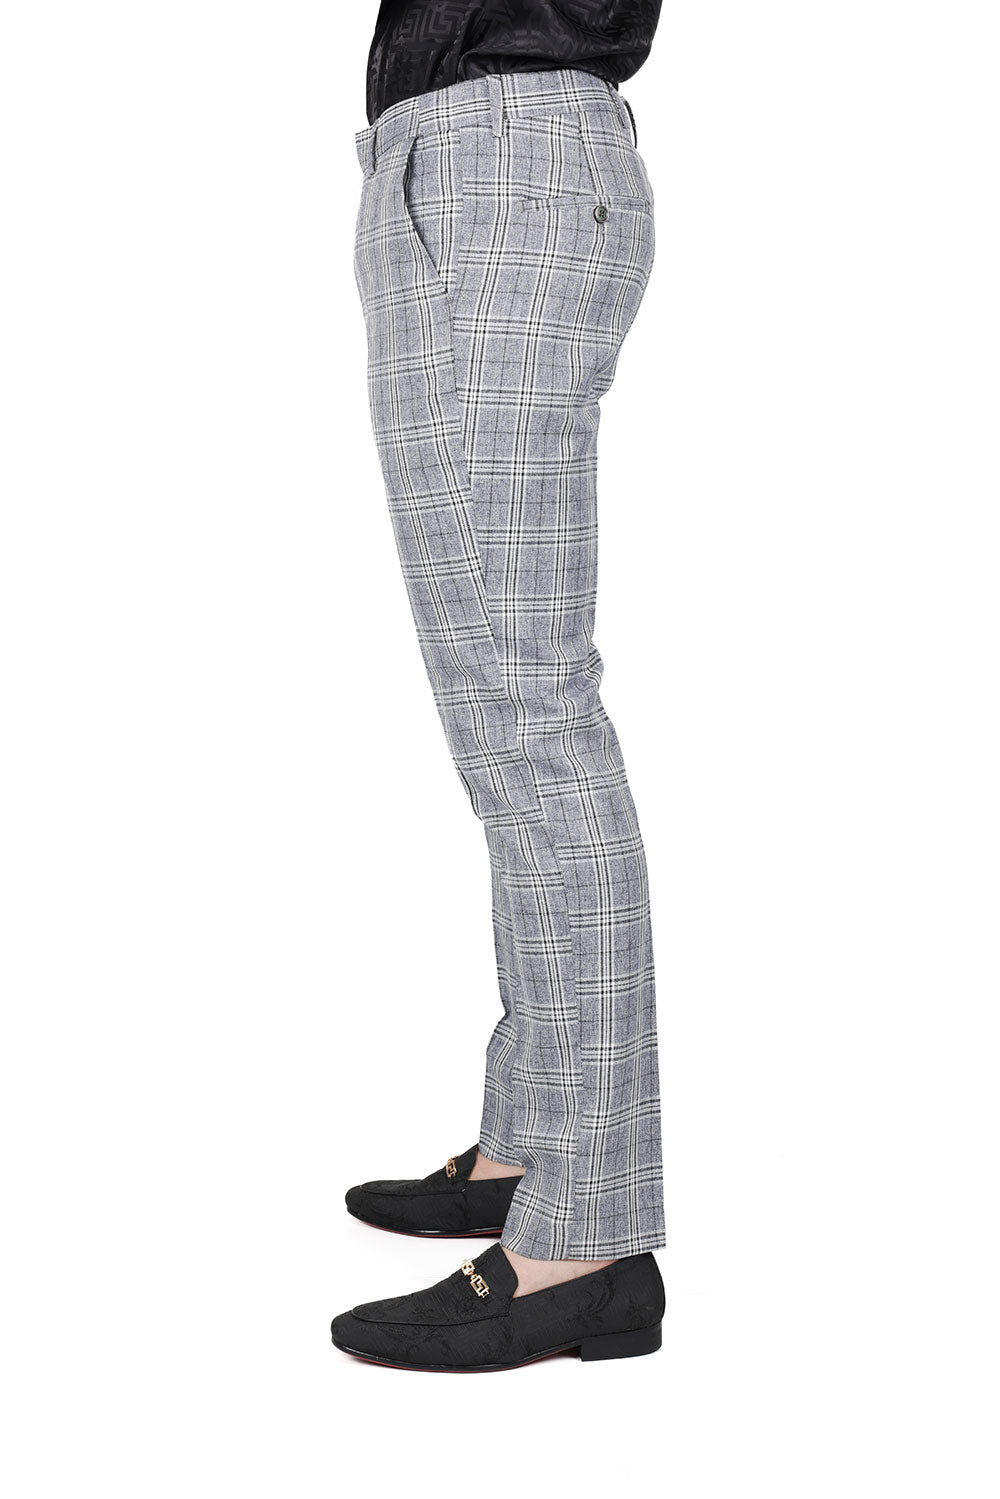 BARABAS men's checkered plaid grey white luxury chino pants CP47